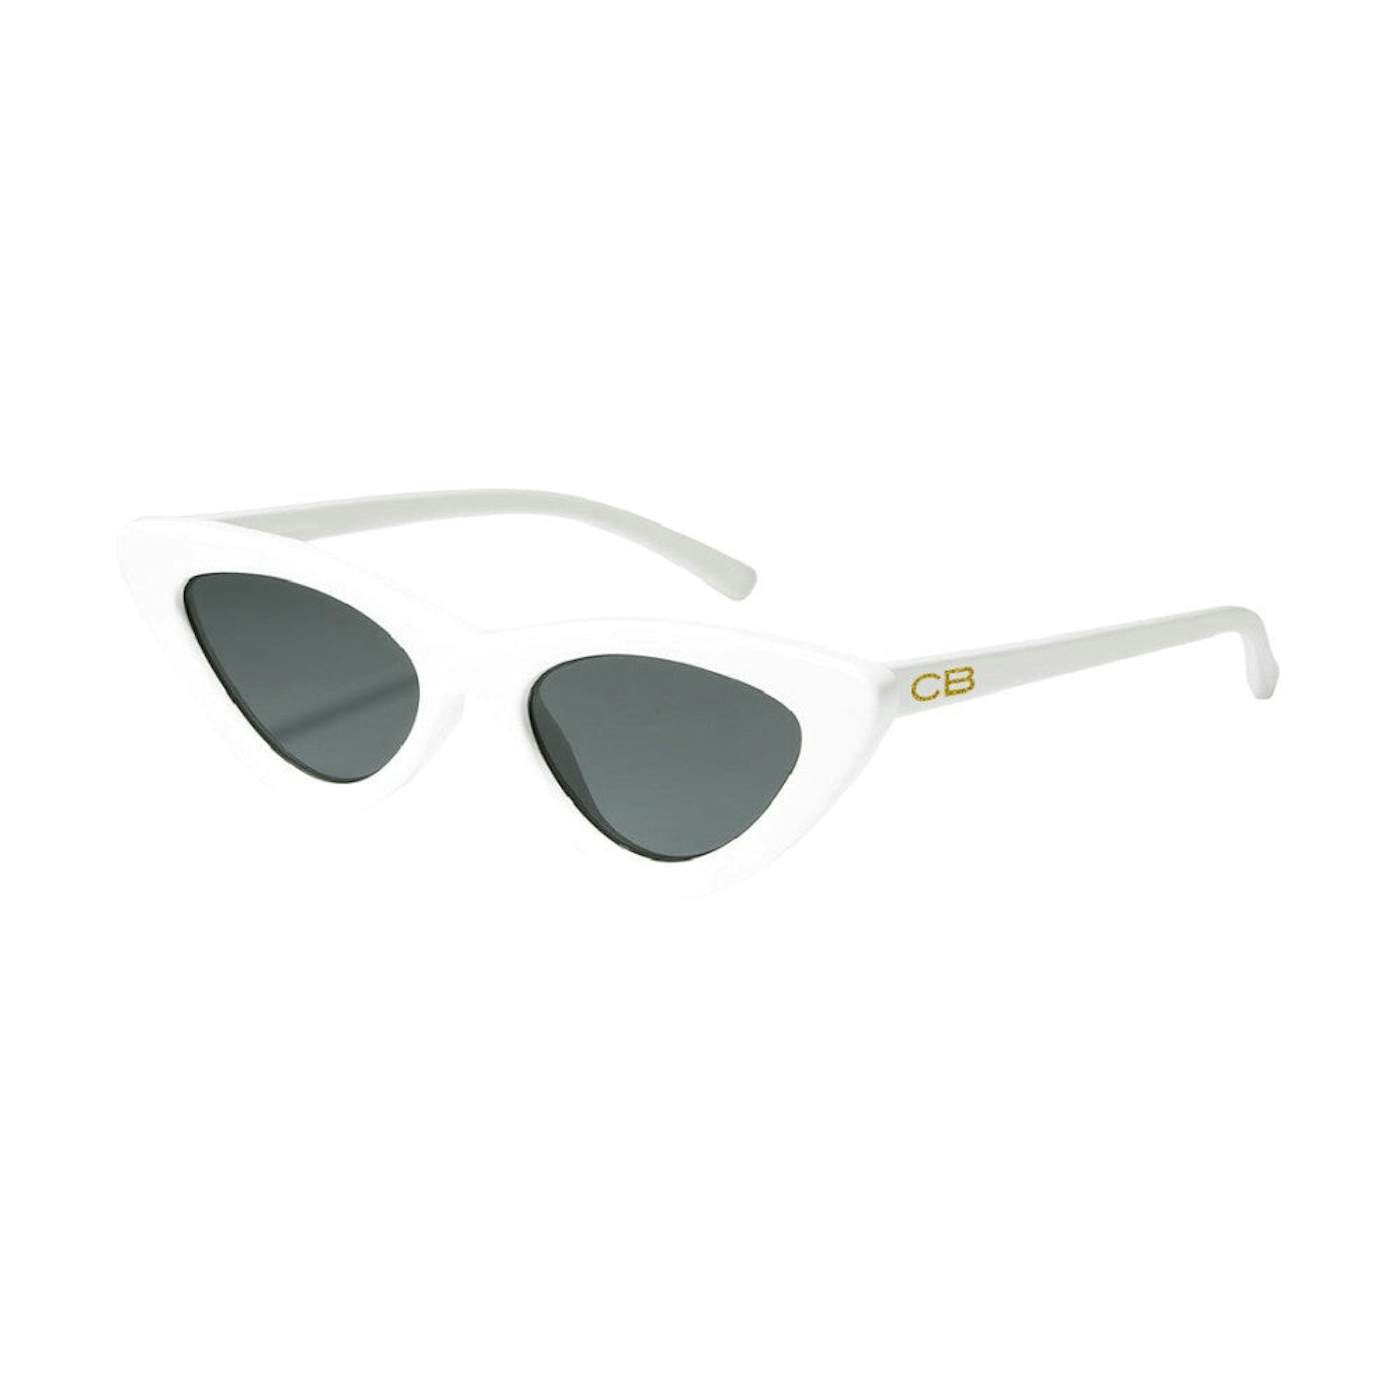 Cardi B IOP Iconic Sunglasses